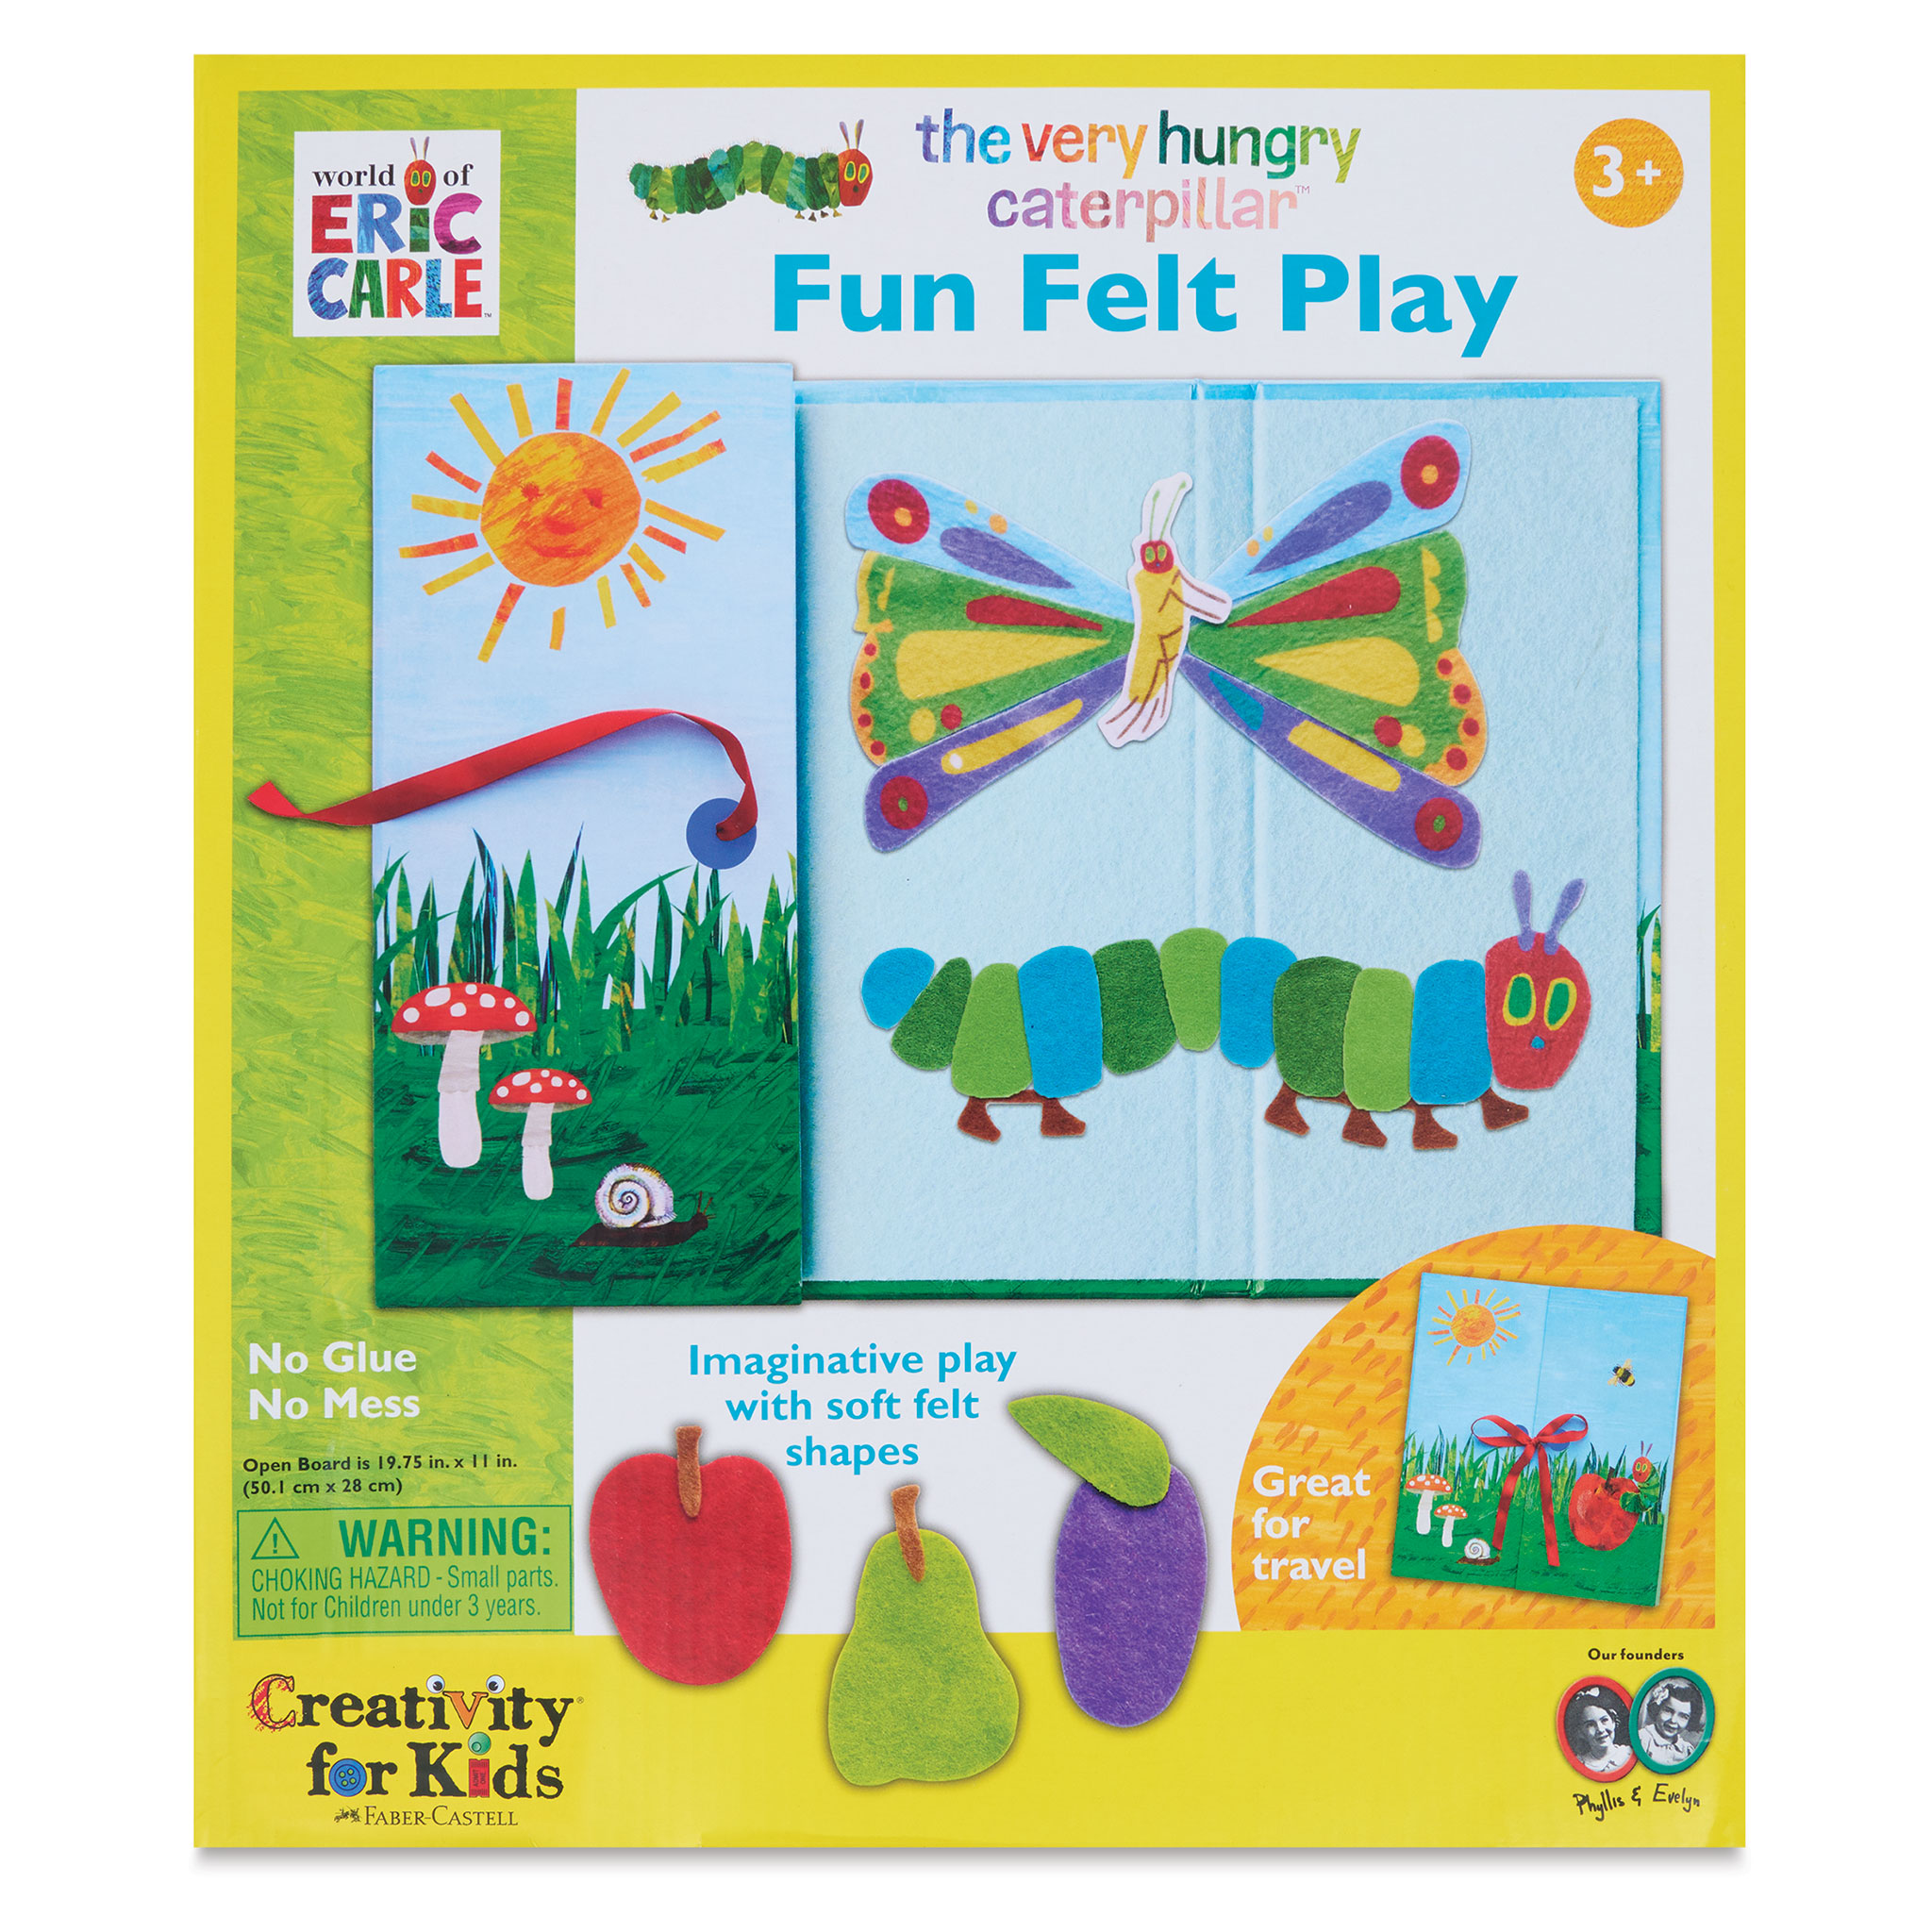 Fun Felt Shapes - Creativity for Kids